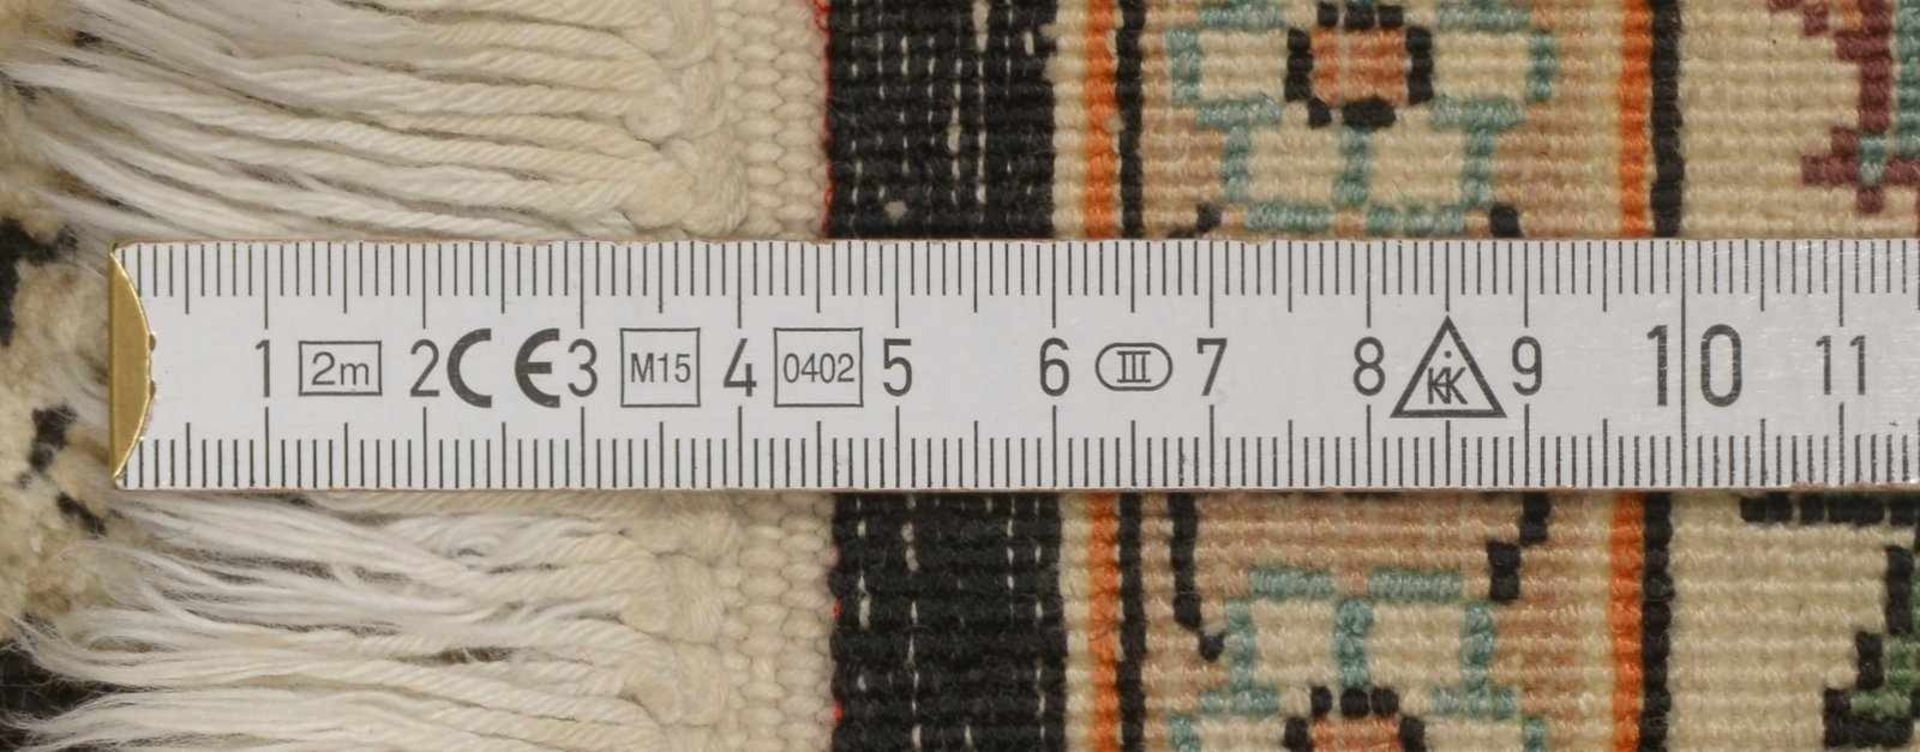 Kaschmir-Seidenteppich, Seide auf Baumwolle, komplett; Maße 187 x 117 cm - Bild 2 aus 2